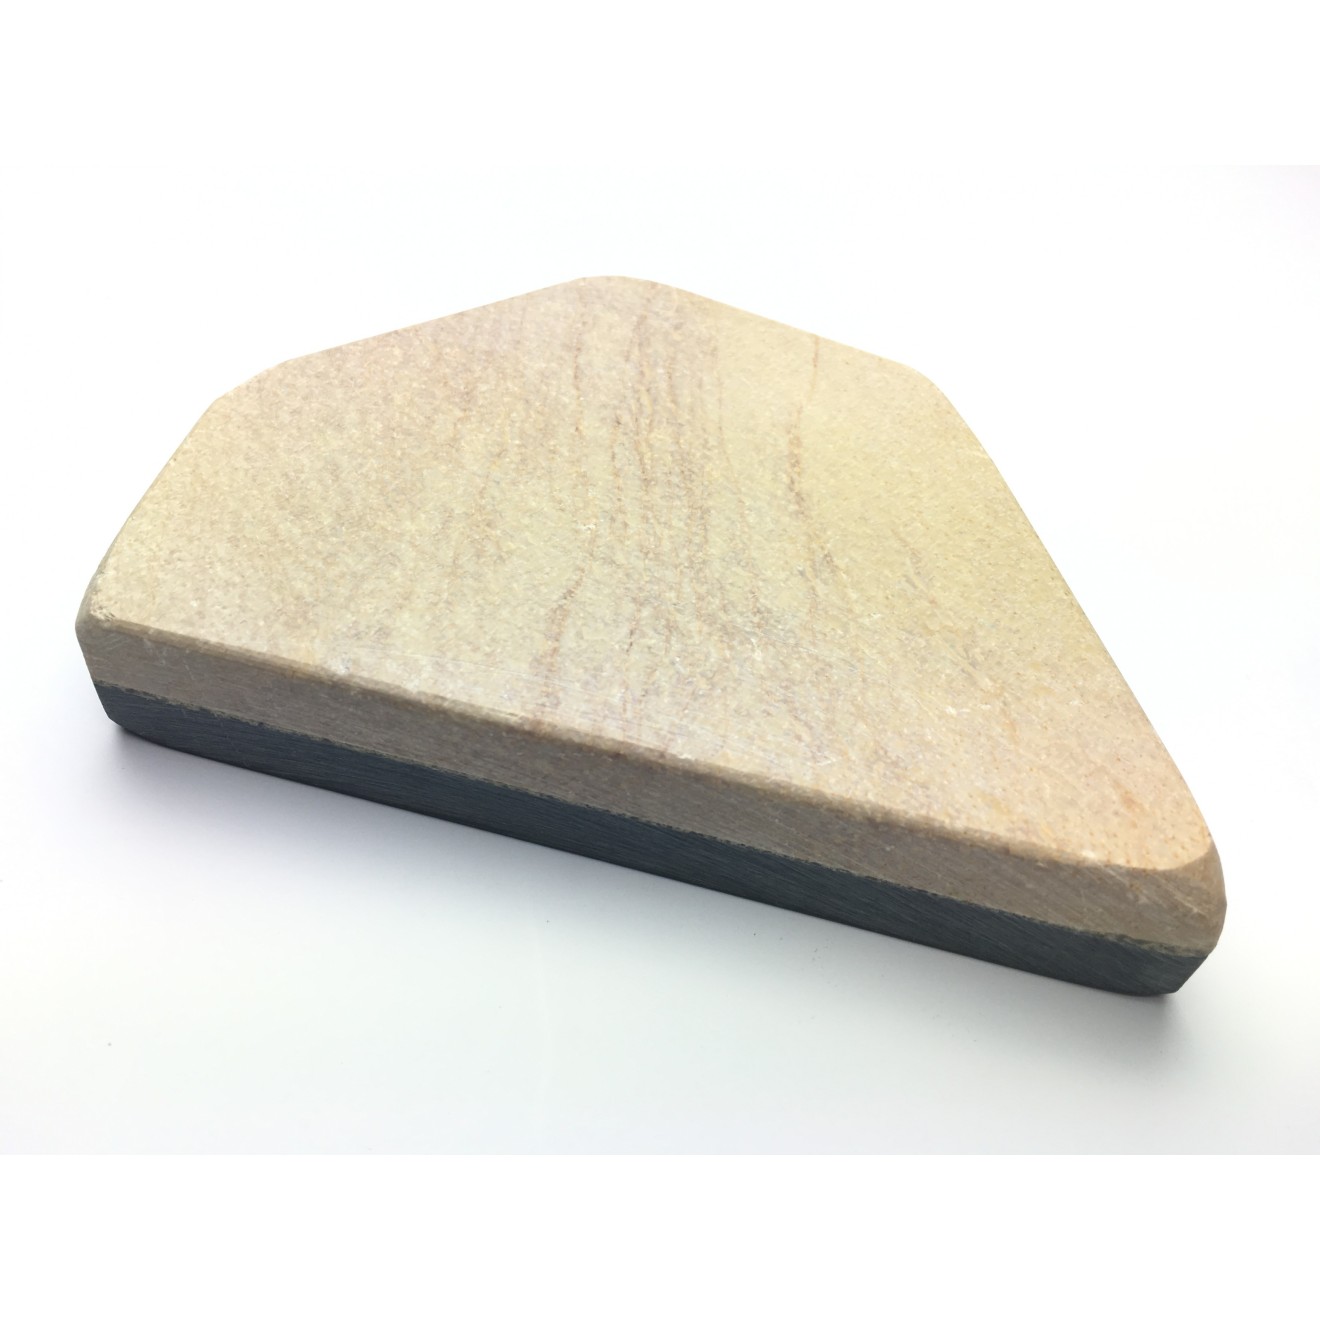 Belgian sharpening stone 3, 28-32 ins², extra-fine